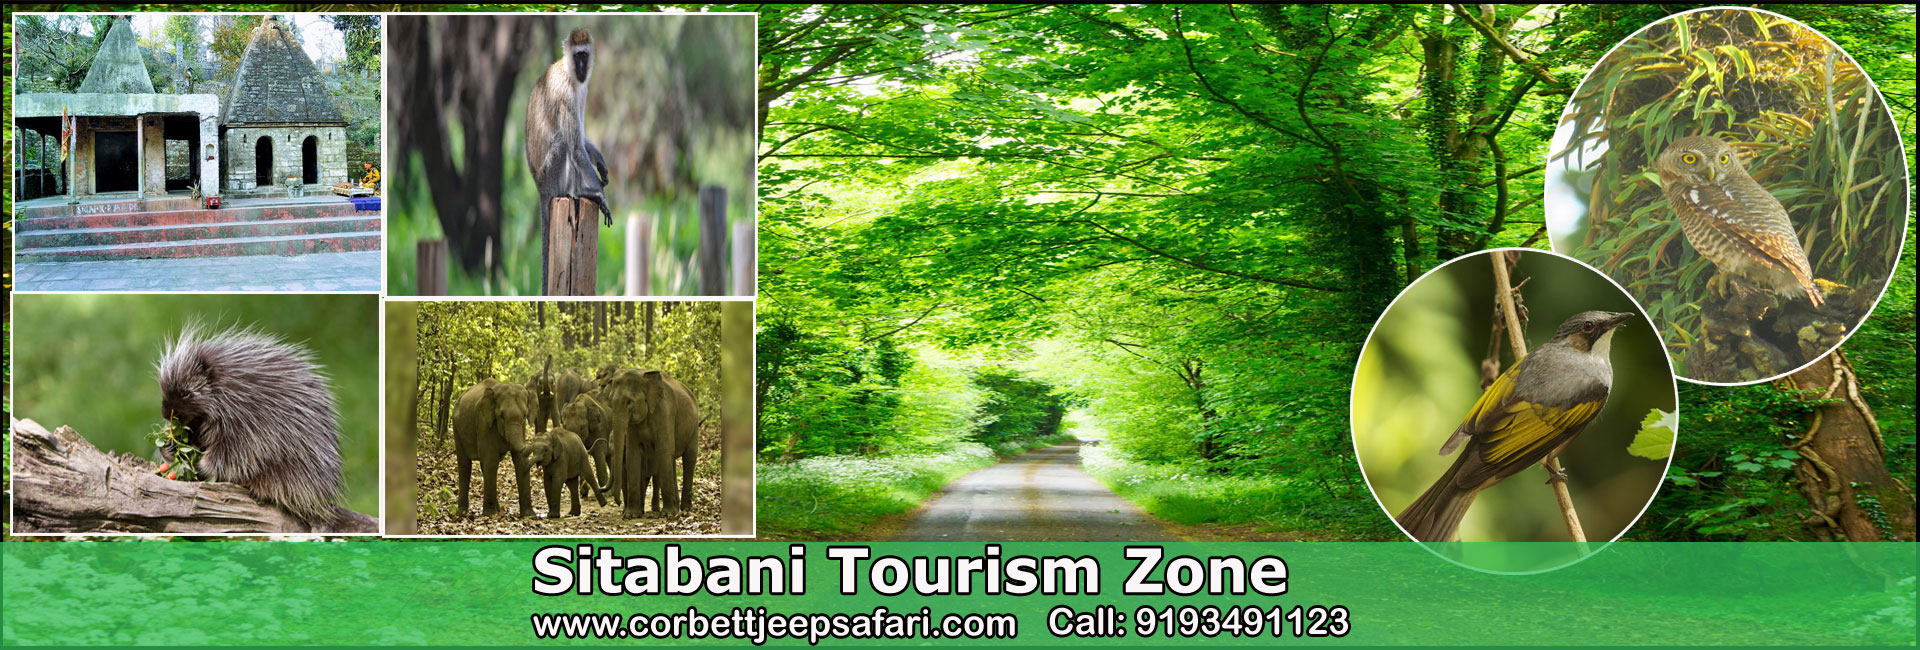 Sitabani Tourism Zone